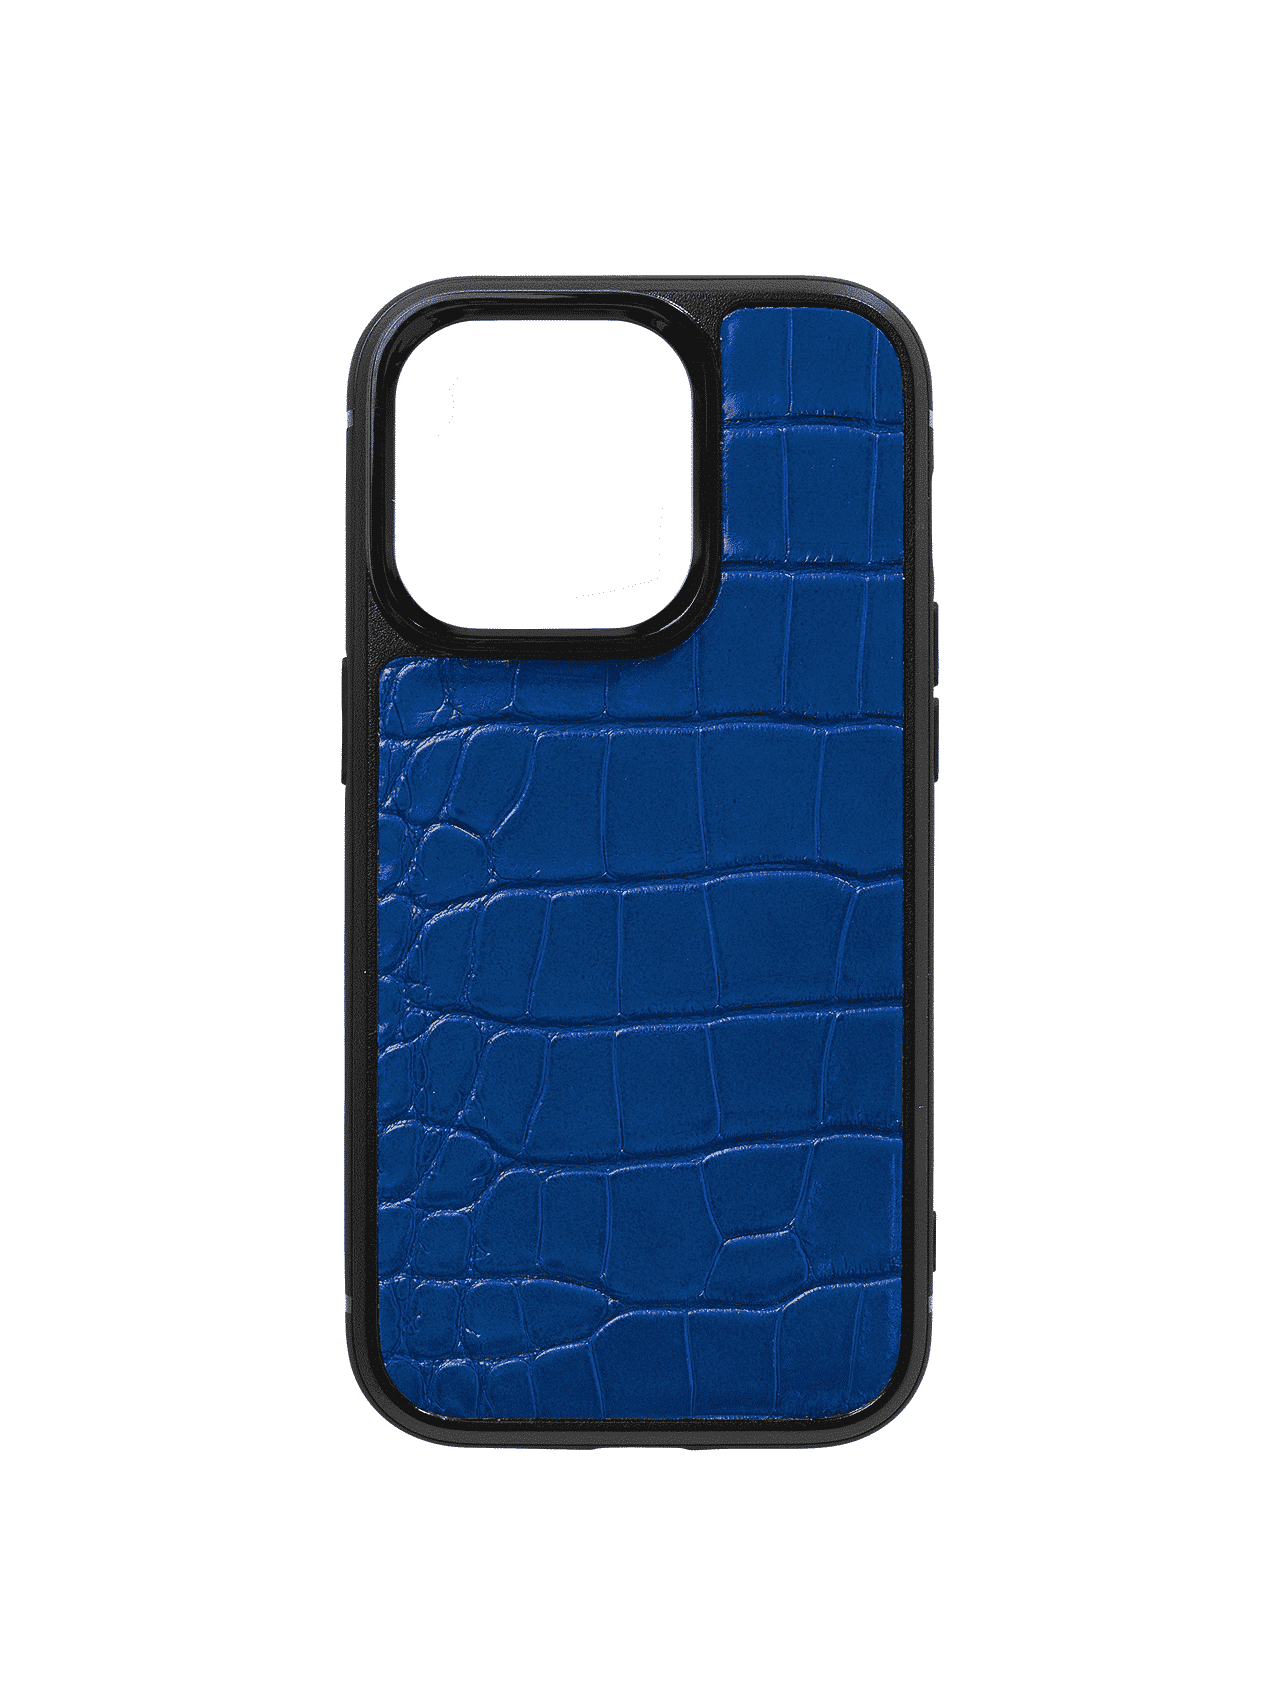 iphone case 14 leather alligator blue